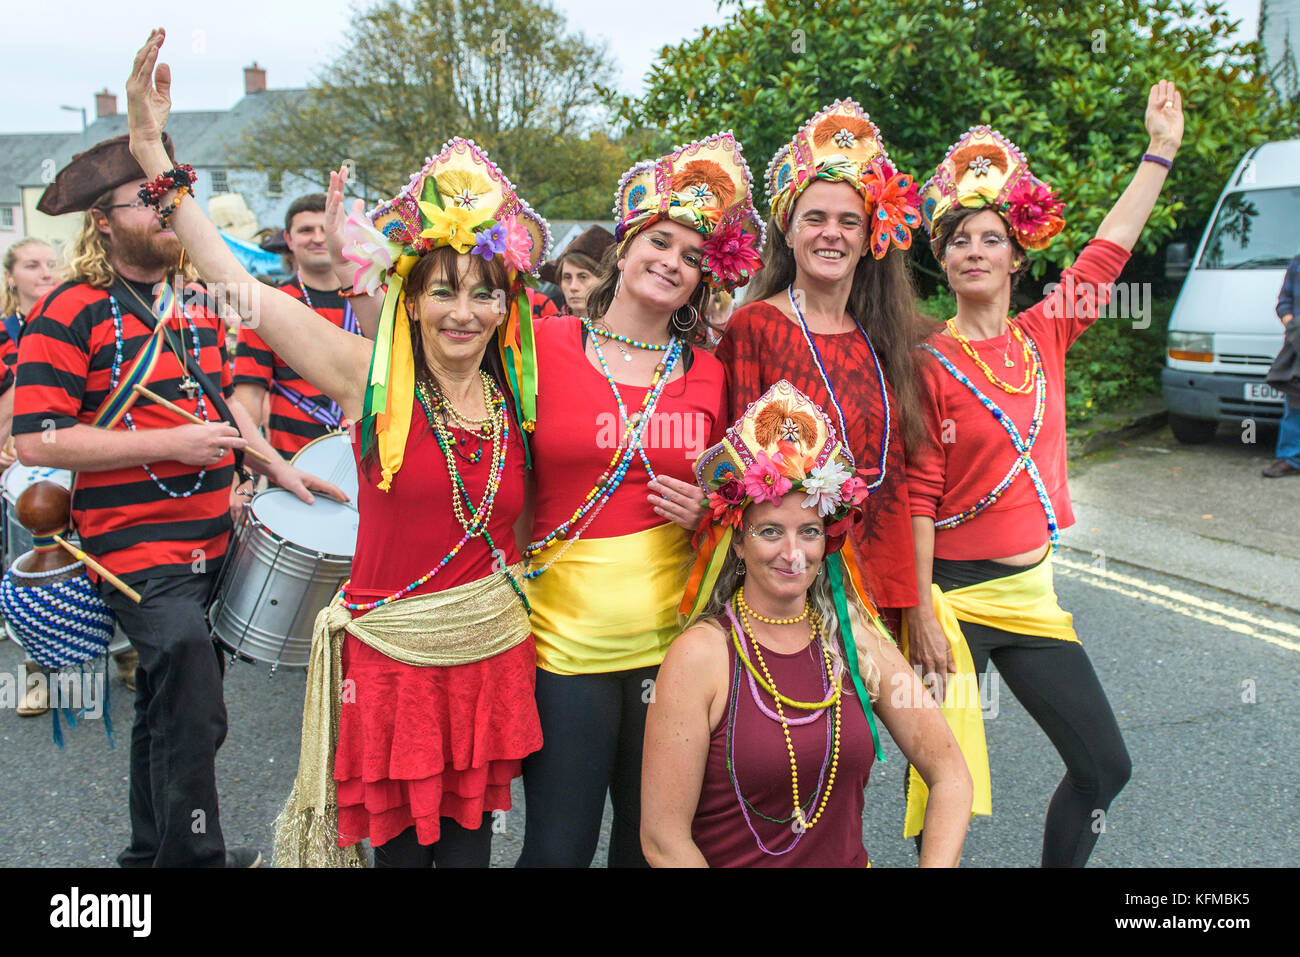 Penryn Kemeneth a two day heritage festival at Penryn Cornwall - Samba dancers of the DakaDoum Samba Band. Stock Photo